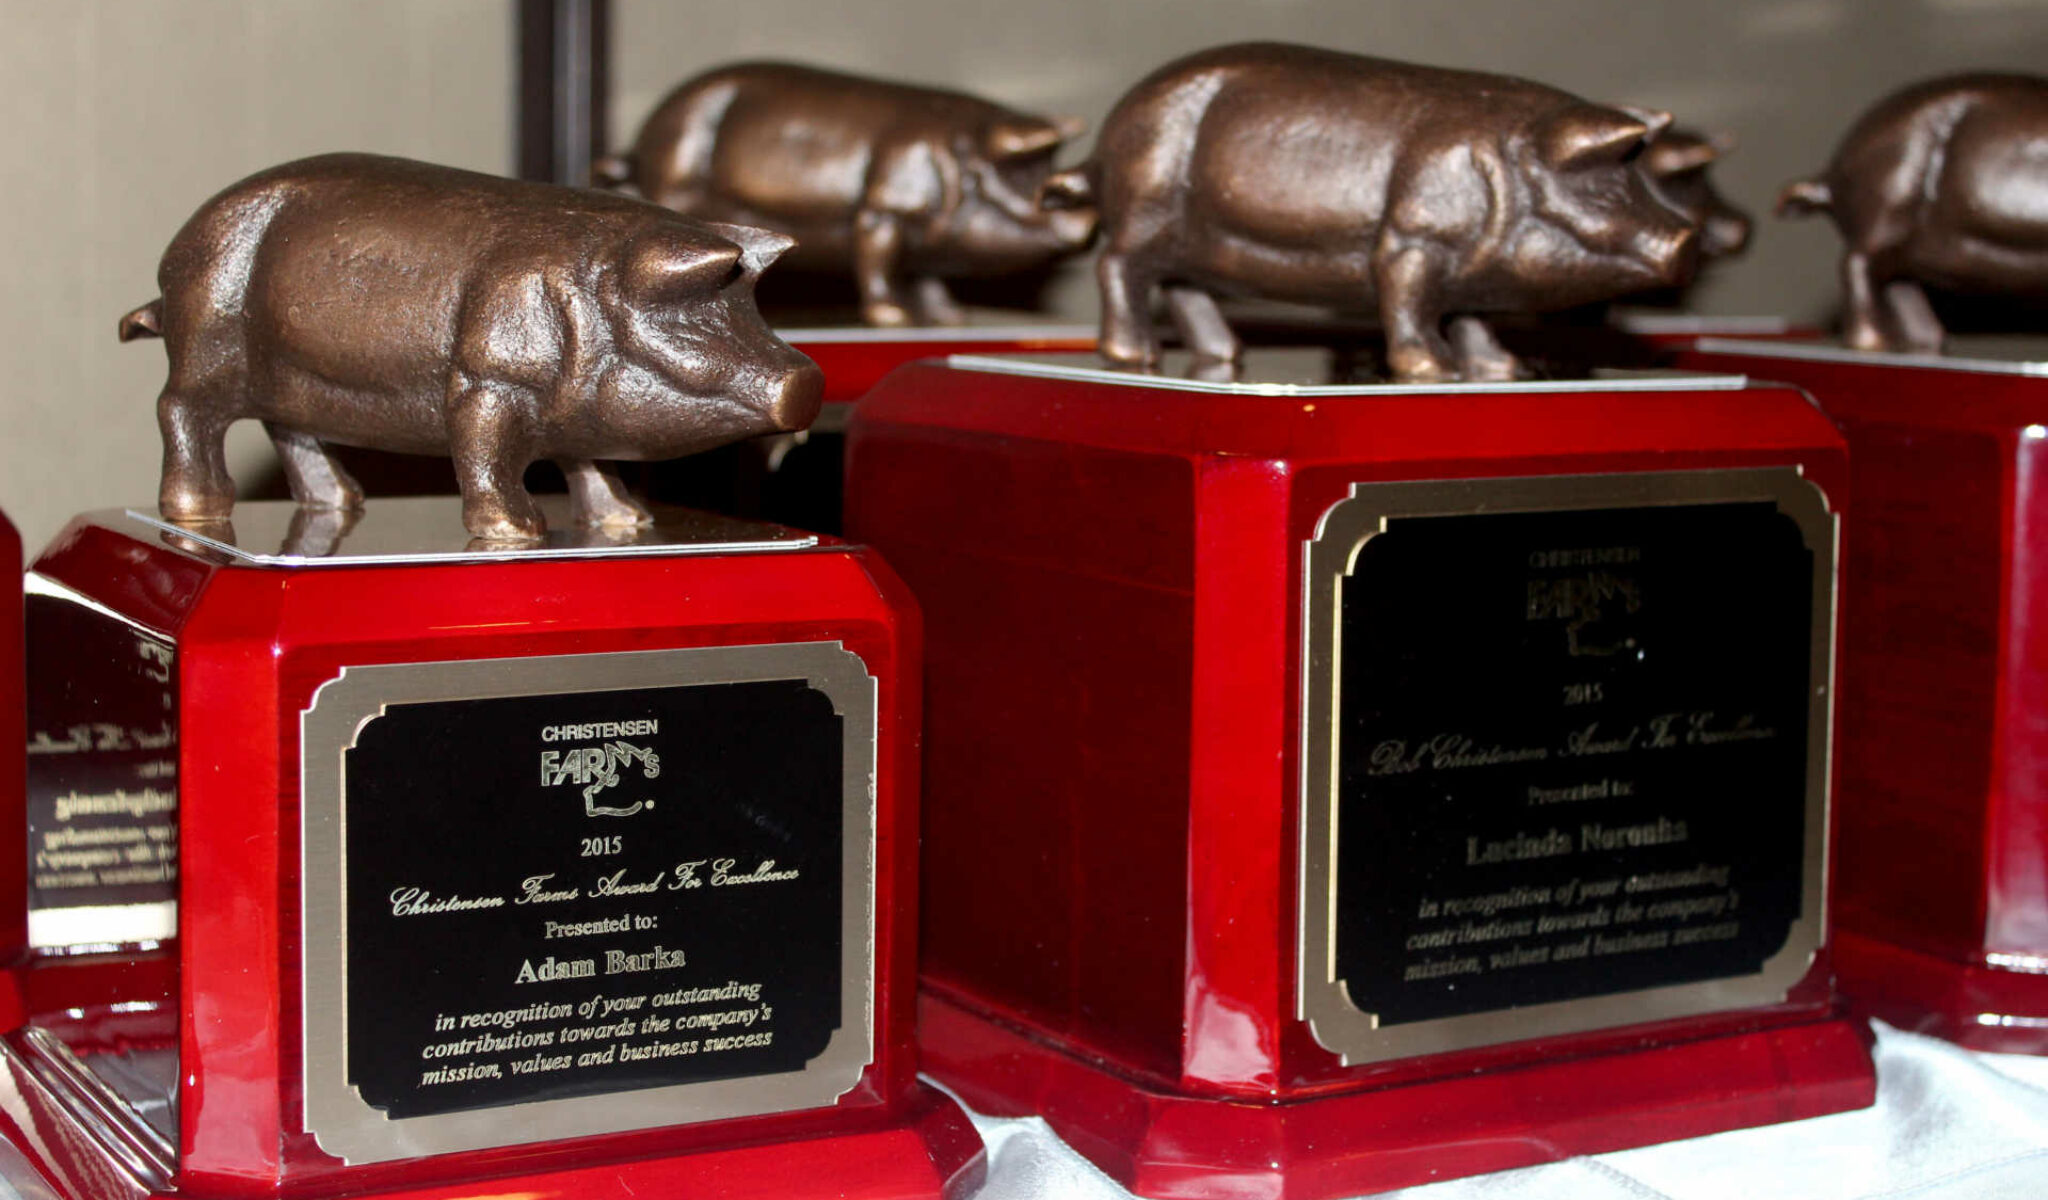 Christensen Farms Hosts Its 3rd Annual Organizational Awards Event